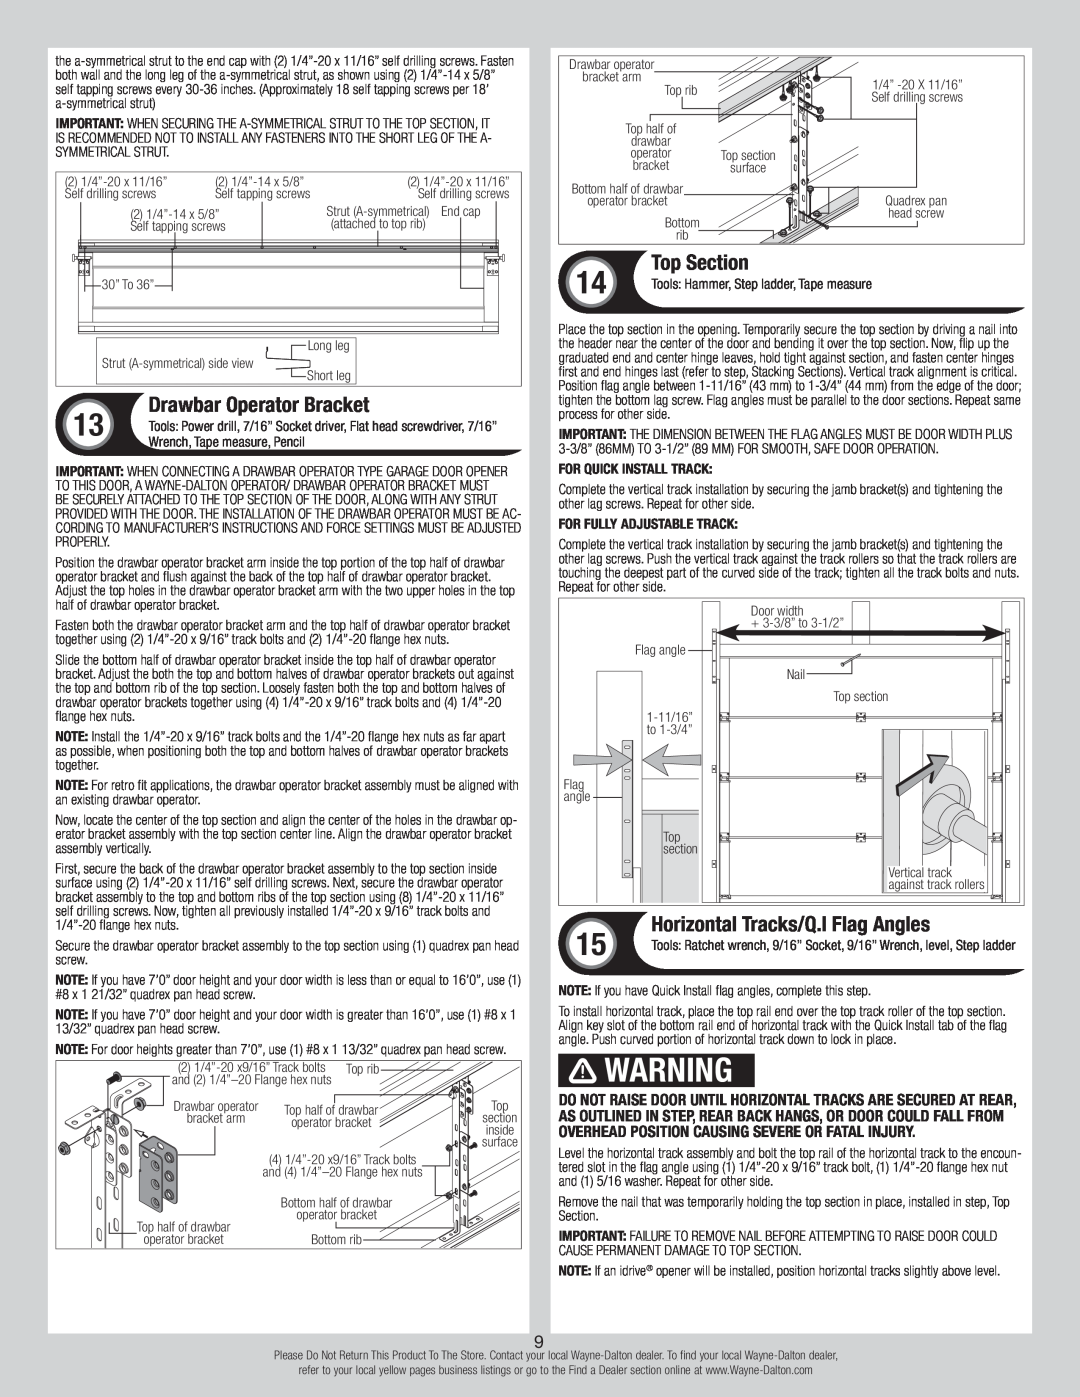 Wayne-Dalton 6100 installation instructions Top Section, Drawbar Operator Bracket, Horizontal Tracks/Q.I Flag Angles 